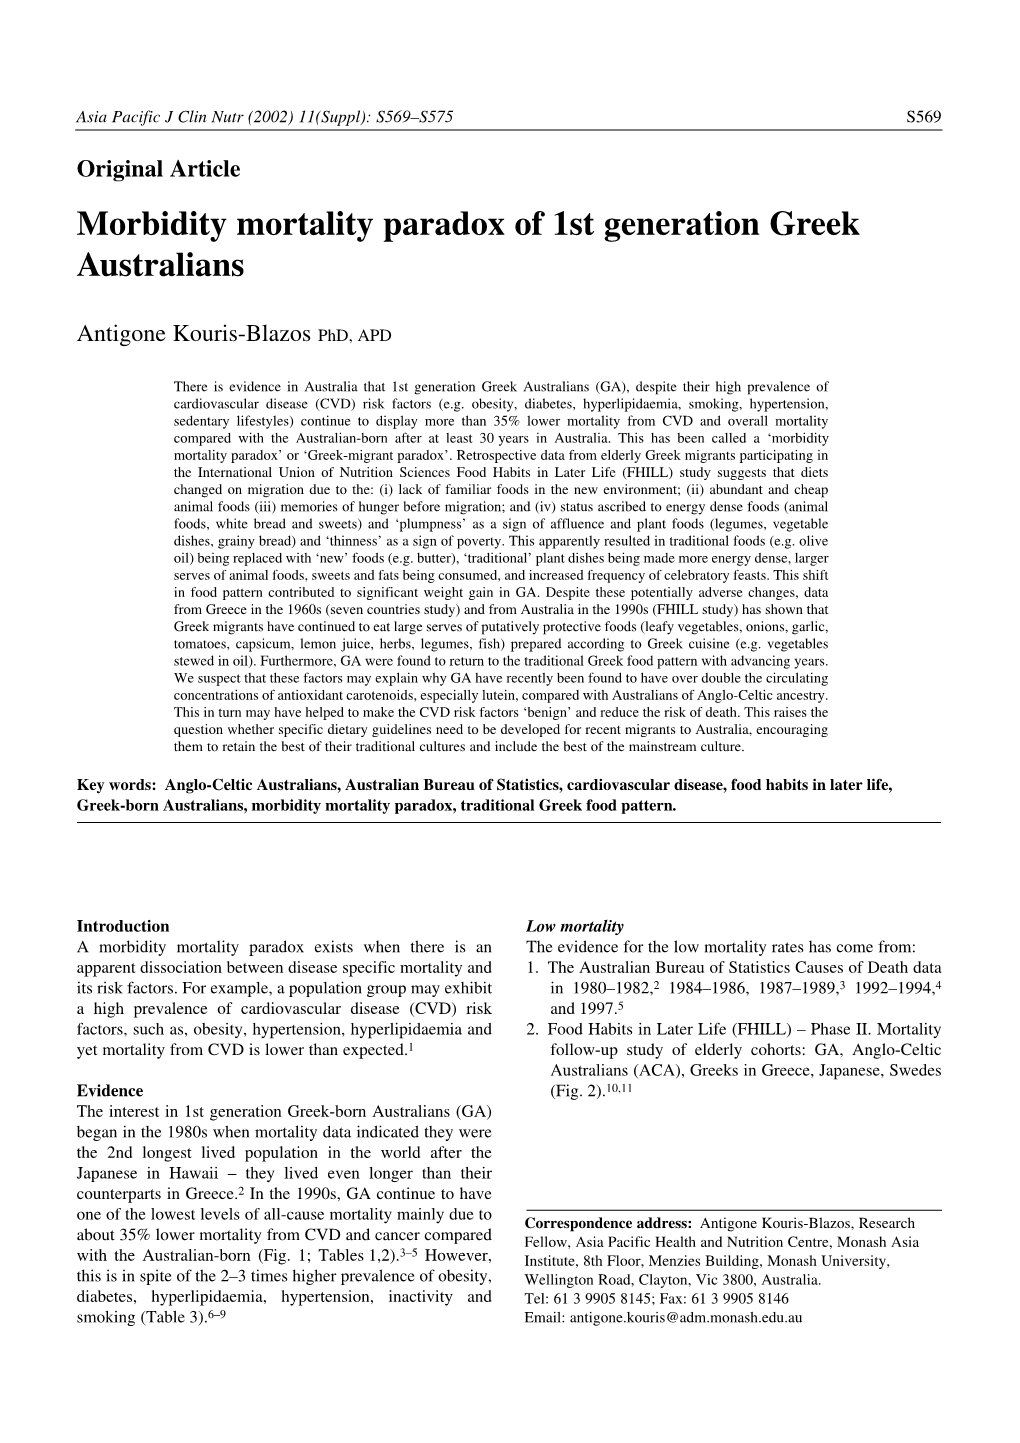 Morbidity Mortality Paradox of 1St Generation Greek Australians